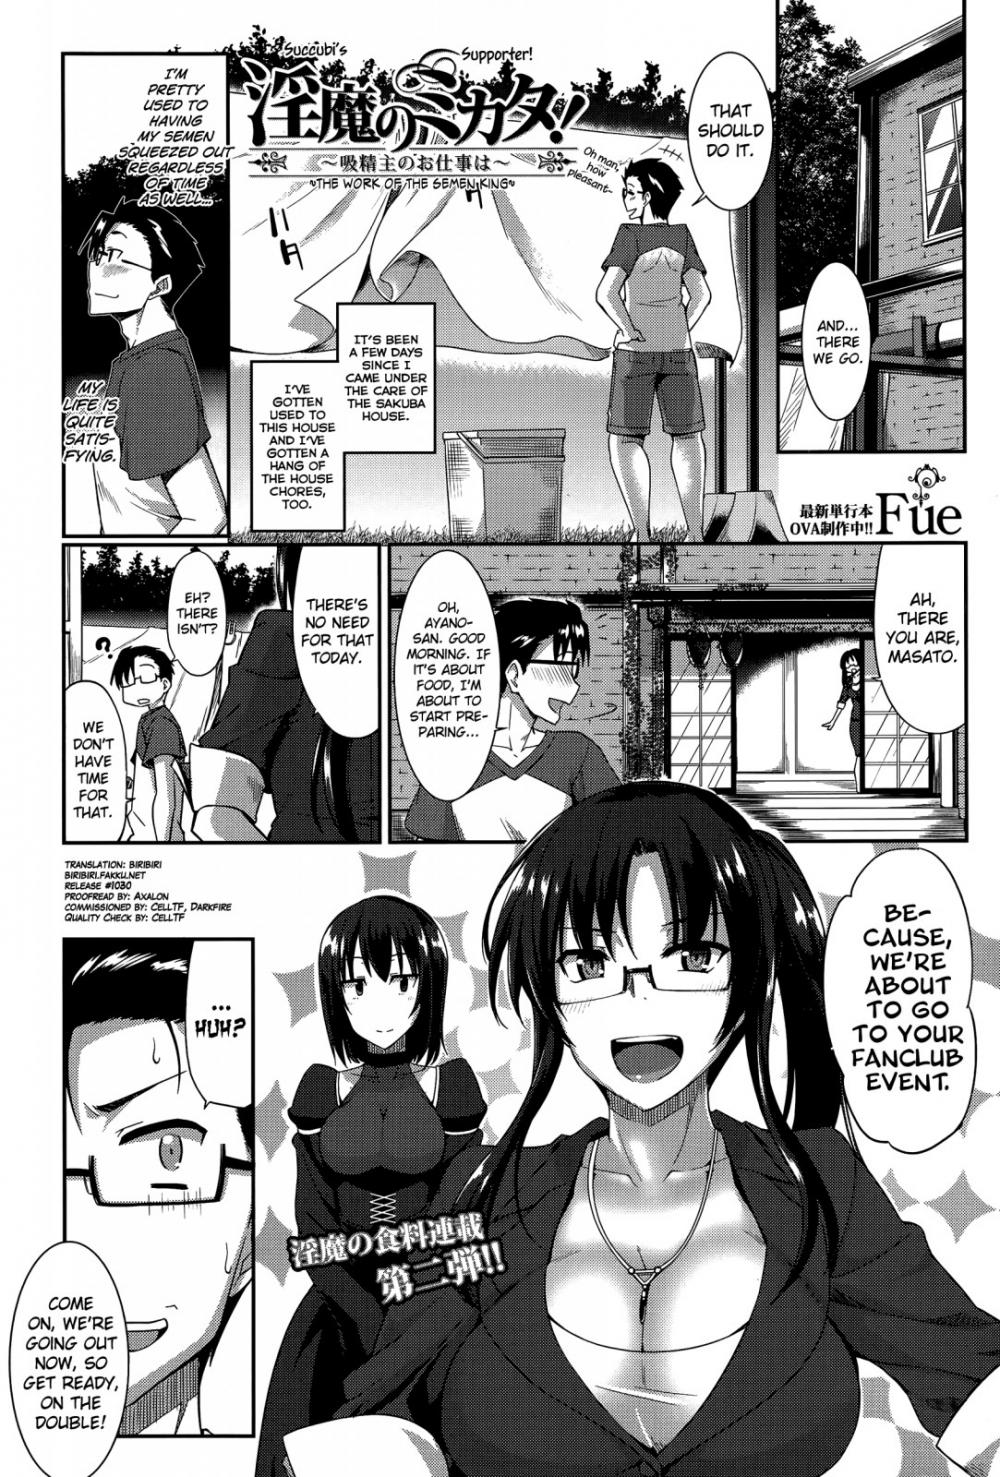 Hentai Manga Comic-Succubi's Supporter!-Chapter 2-1